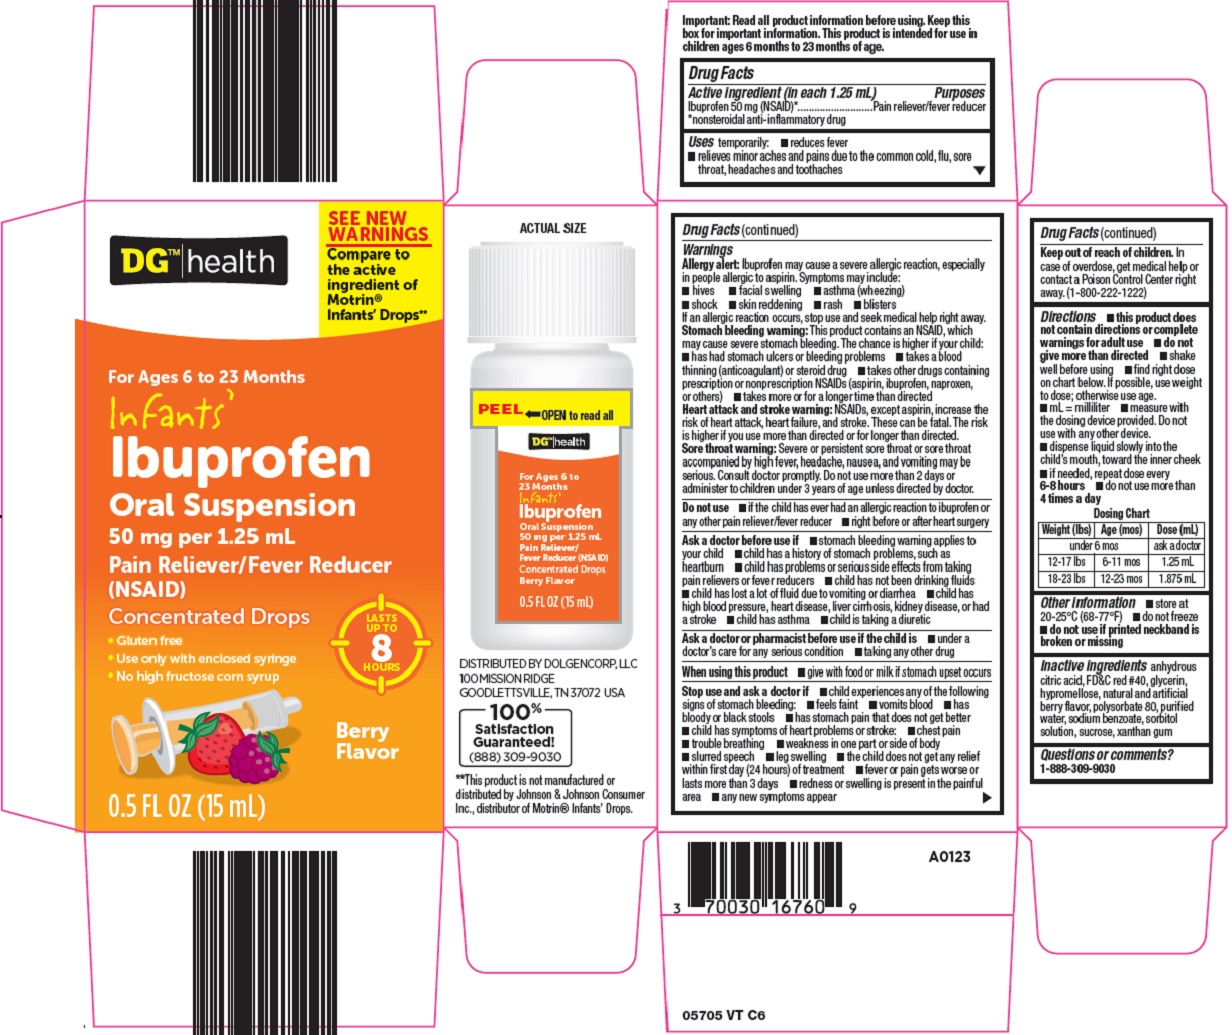 infants ibutprofen image